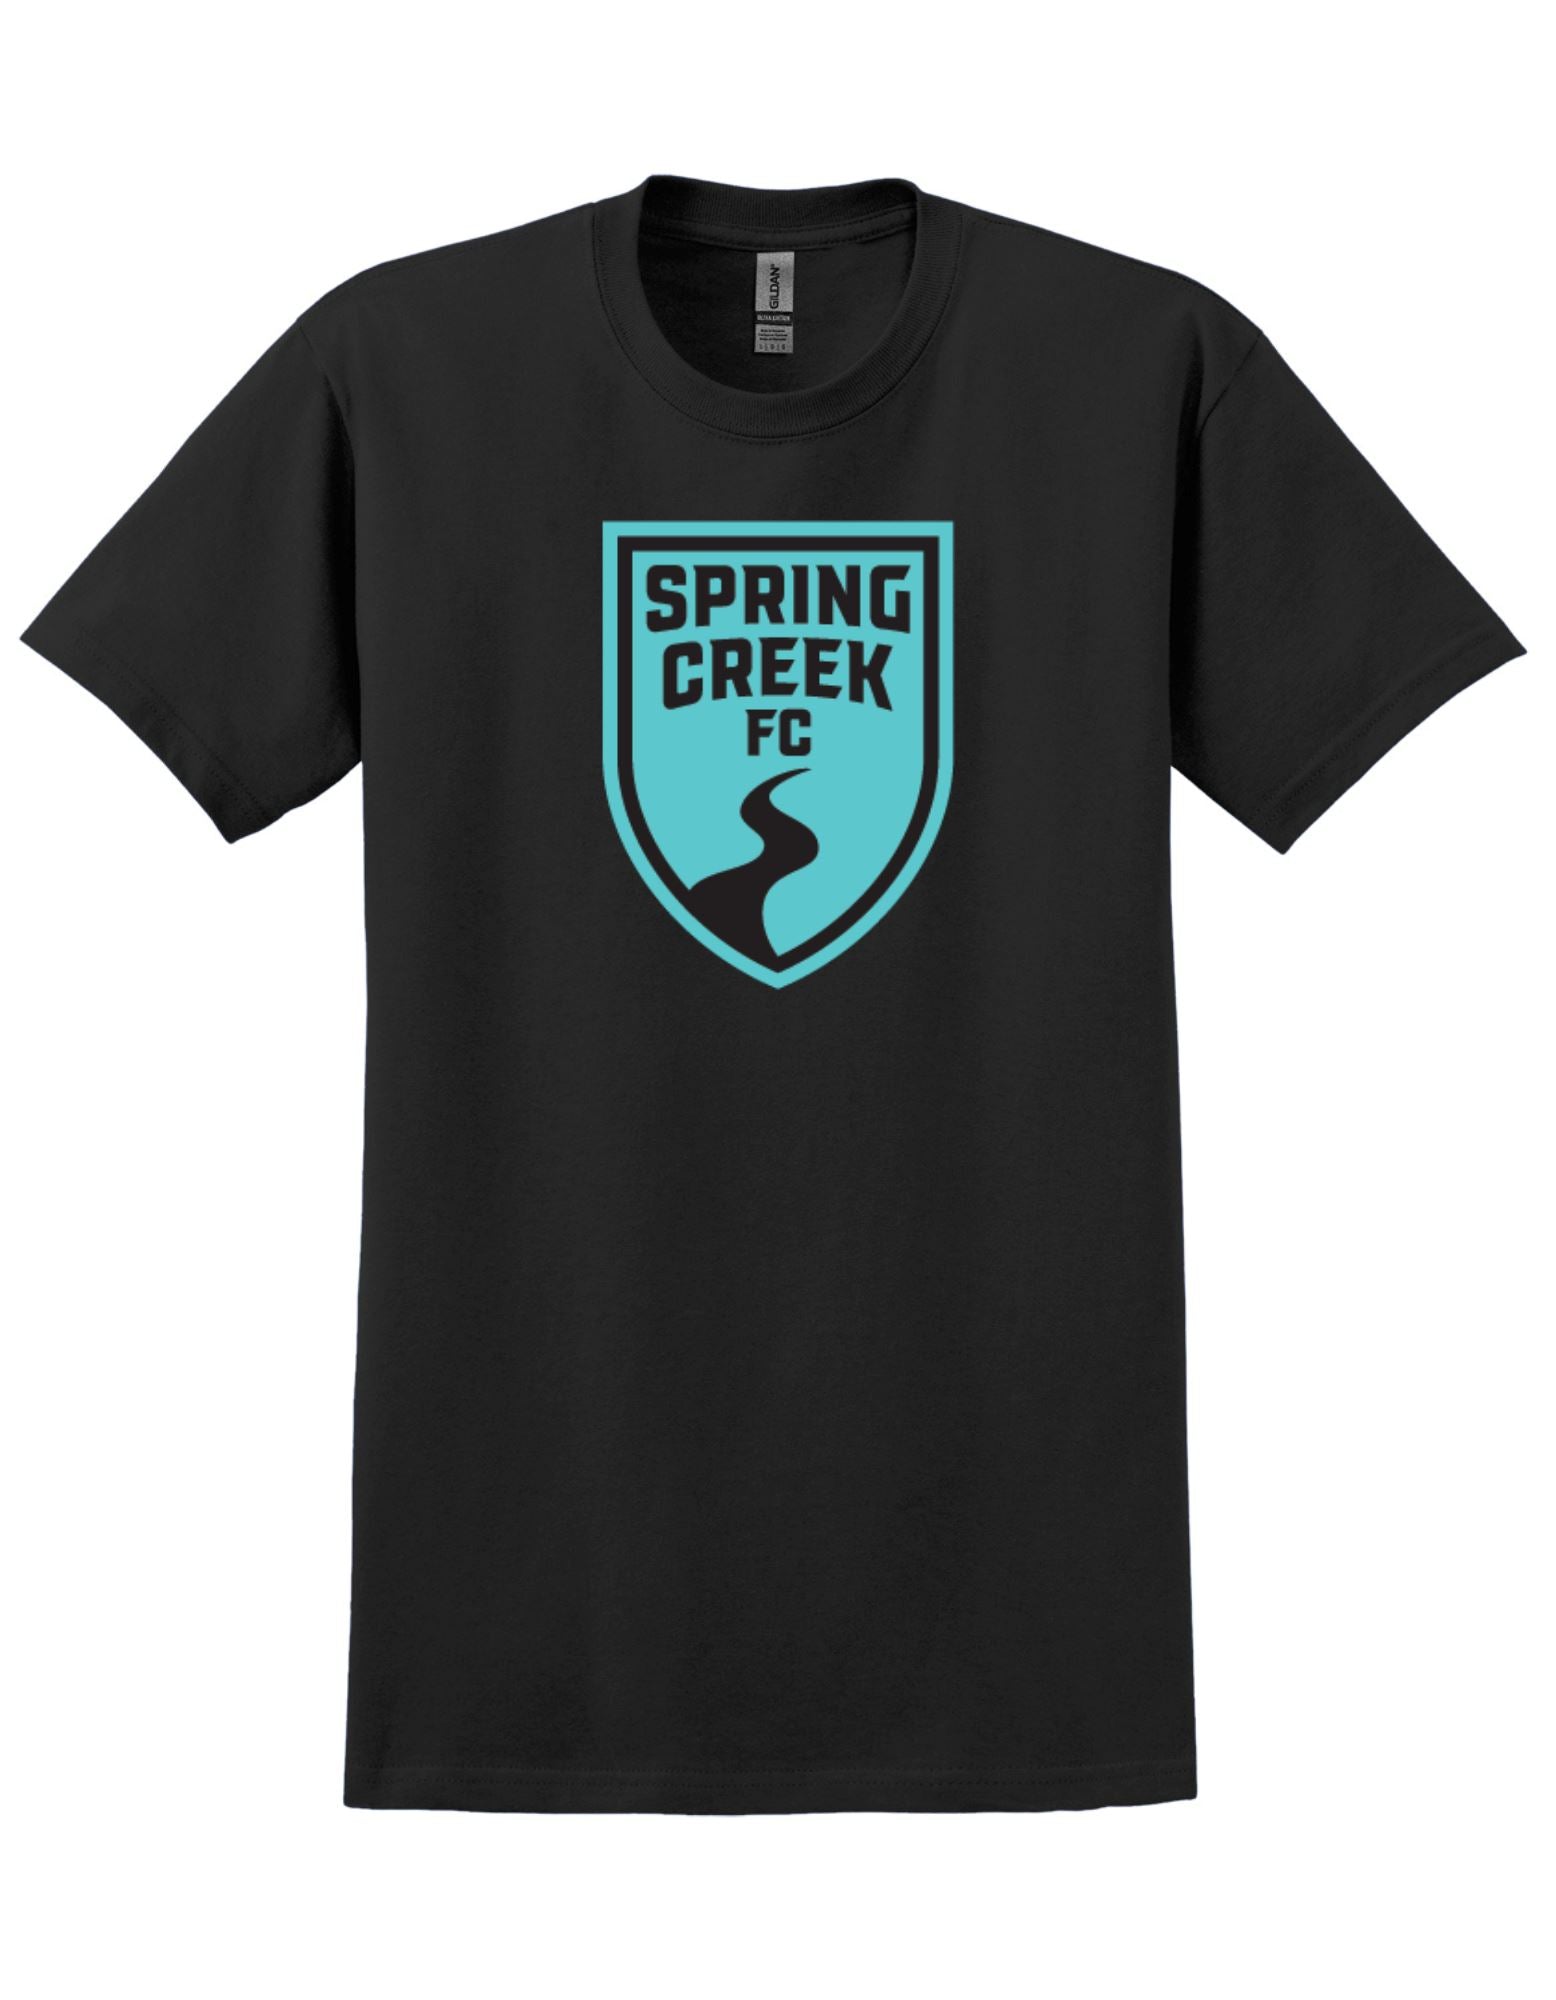 Spring Creek FC | Men's Short Sleeve t-shirt Goal Kick Soccer Black Men's Small 